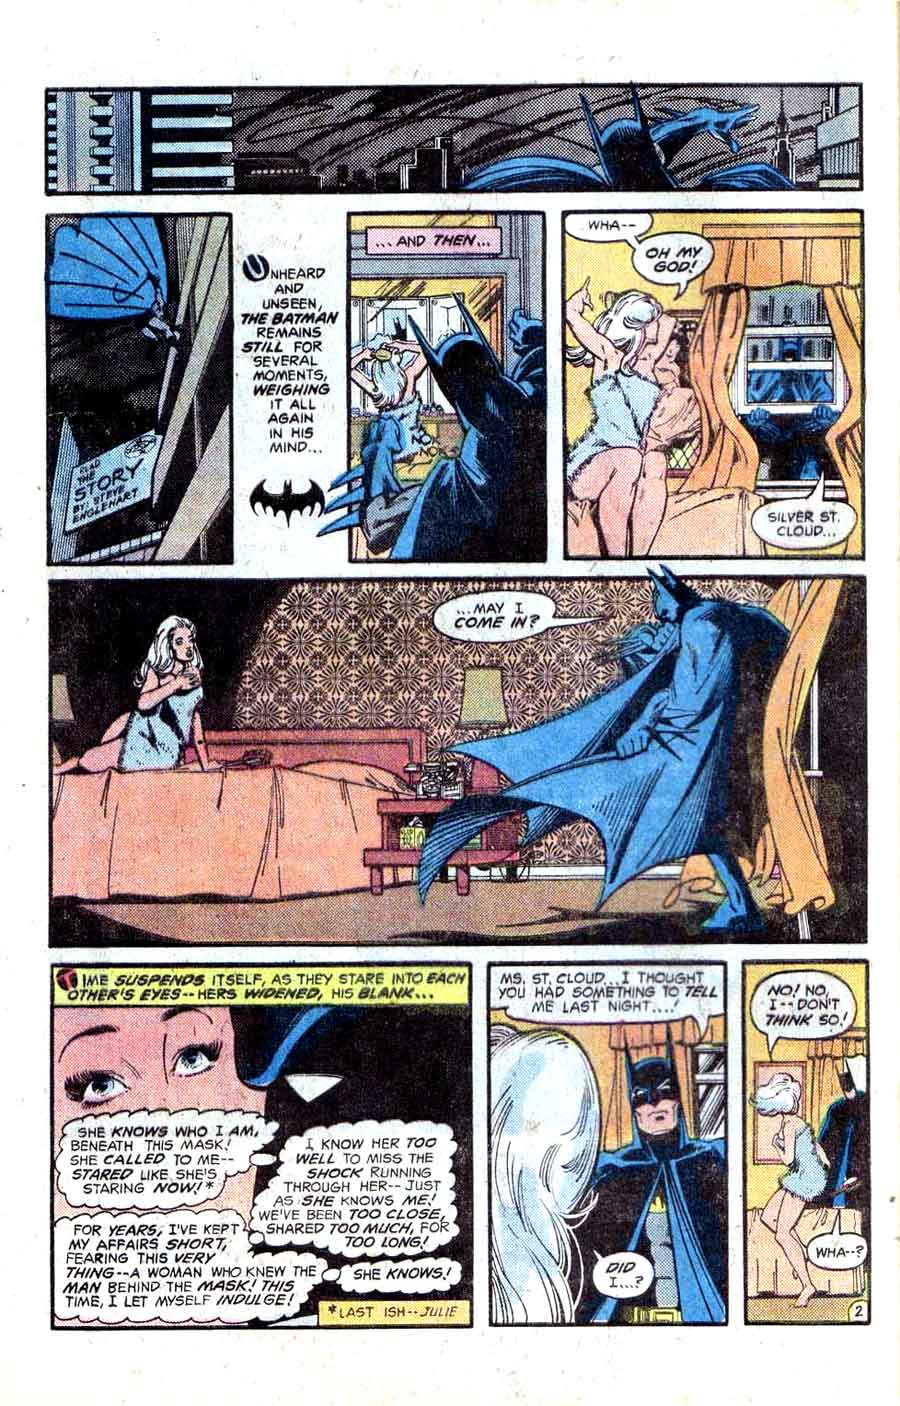 Detective Comics #475 - Marshall Rogers art & cover - Pencil Ink